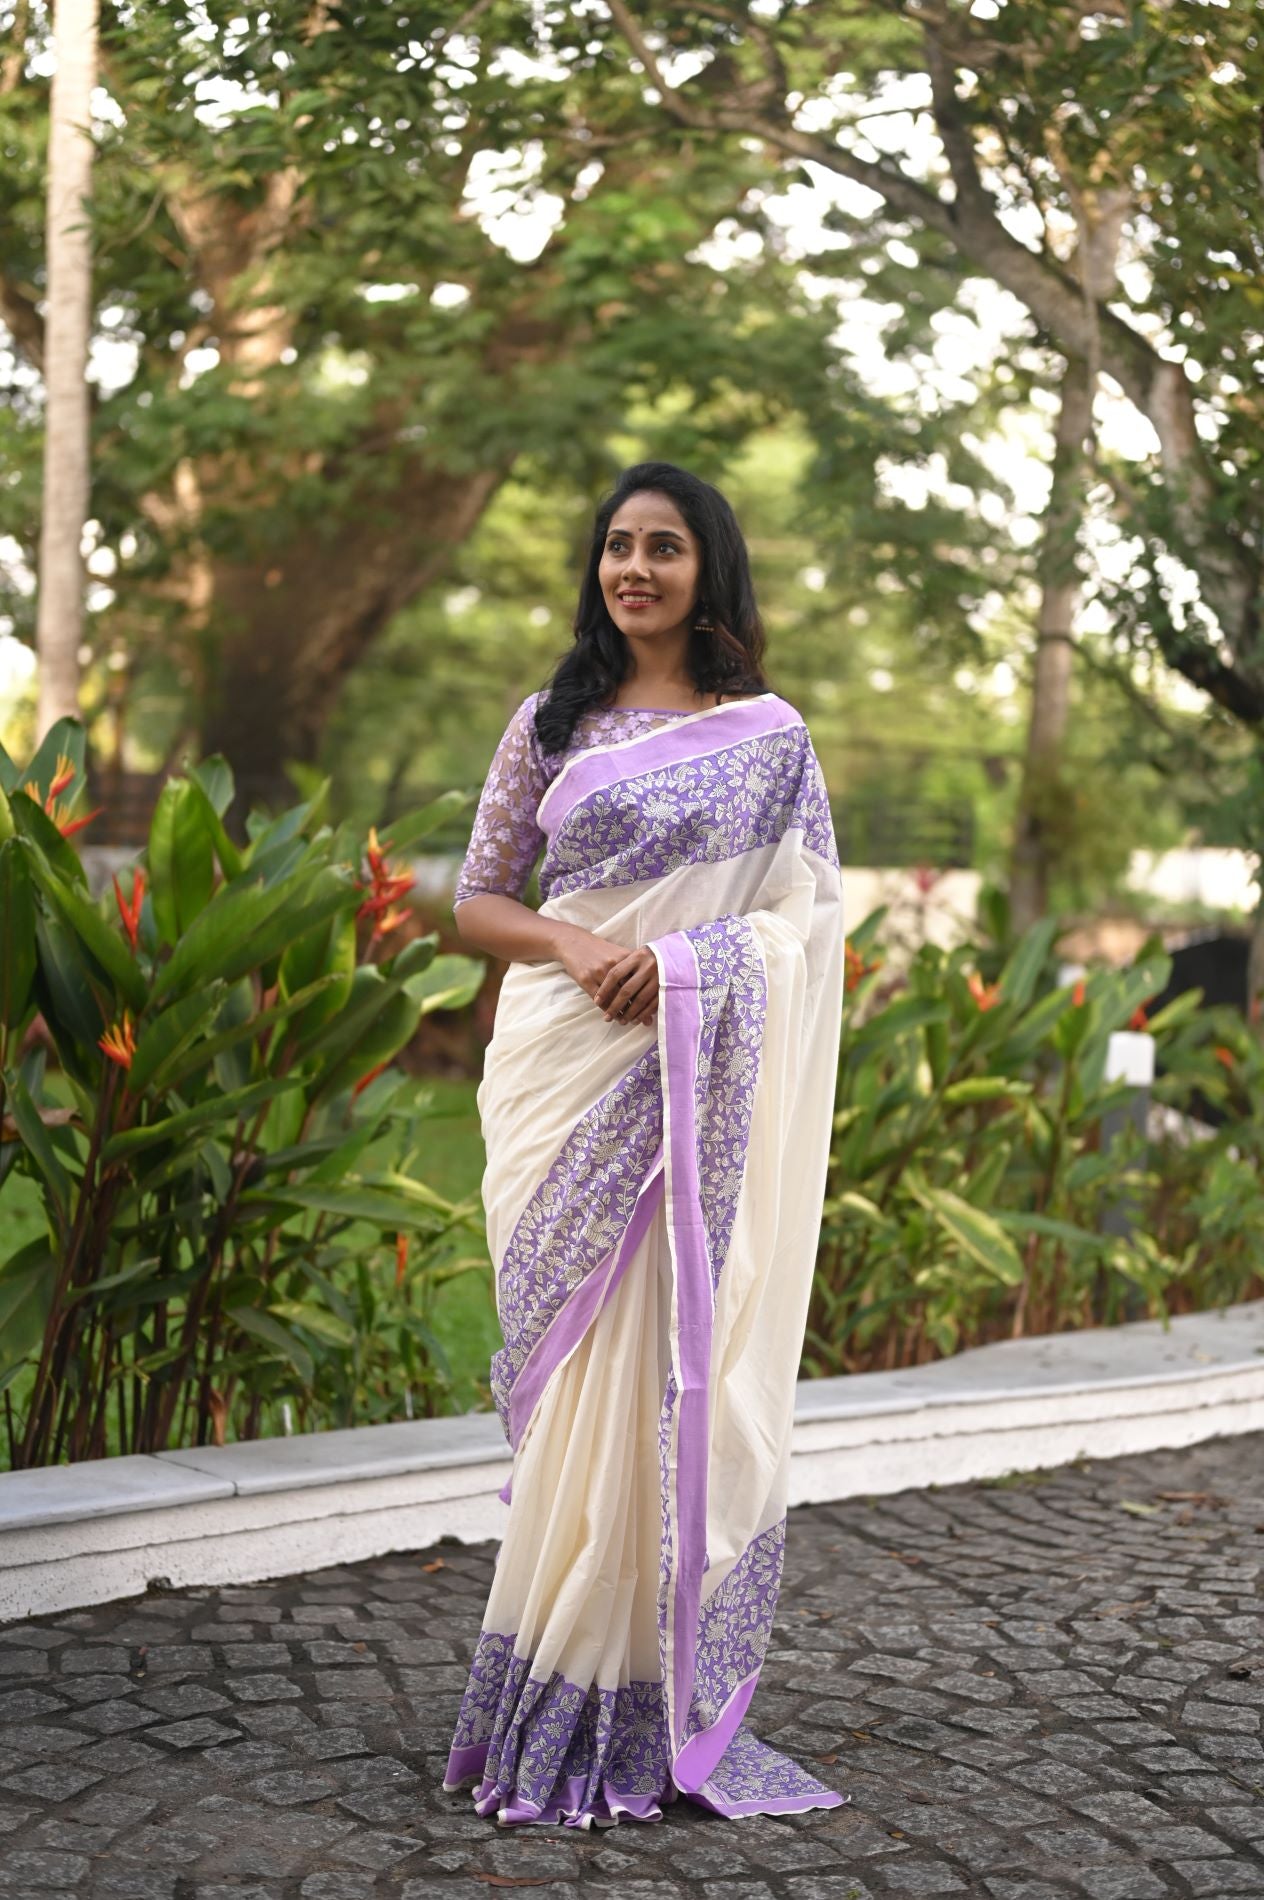 Kalamkari design Kerala sari